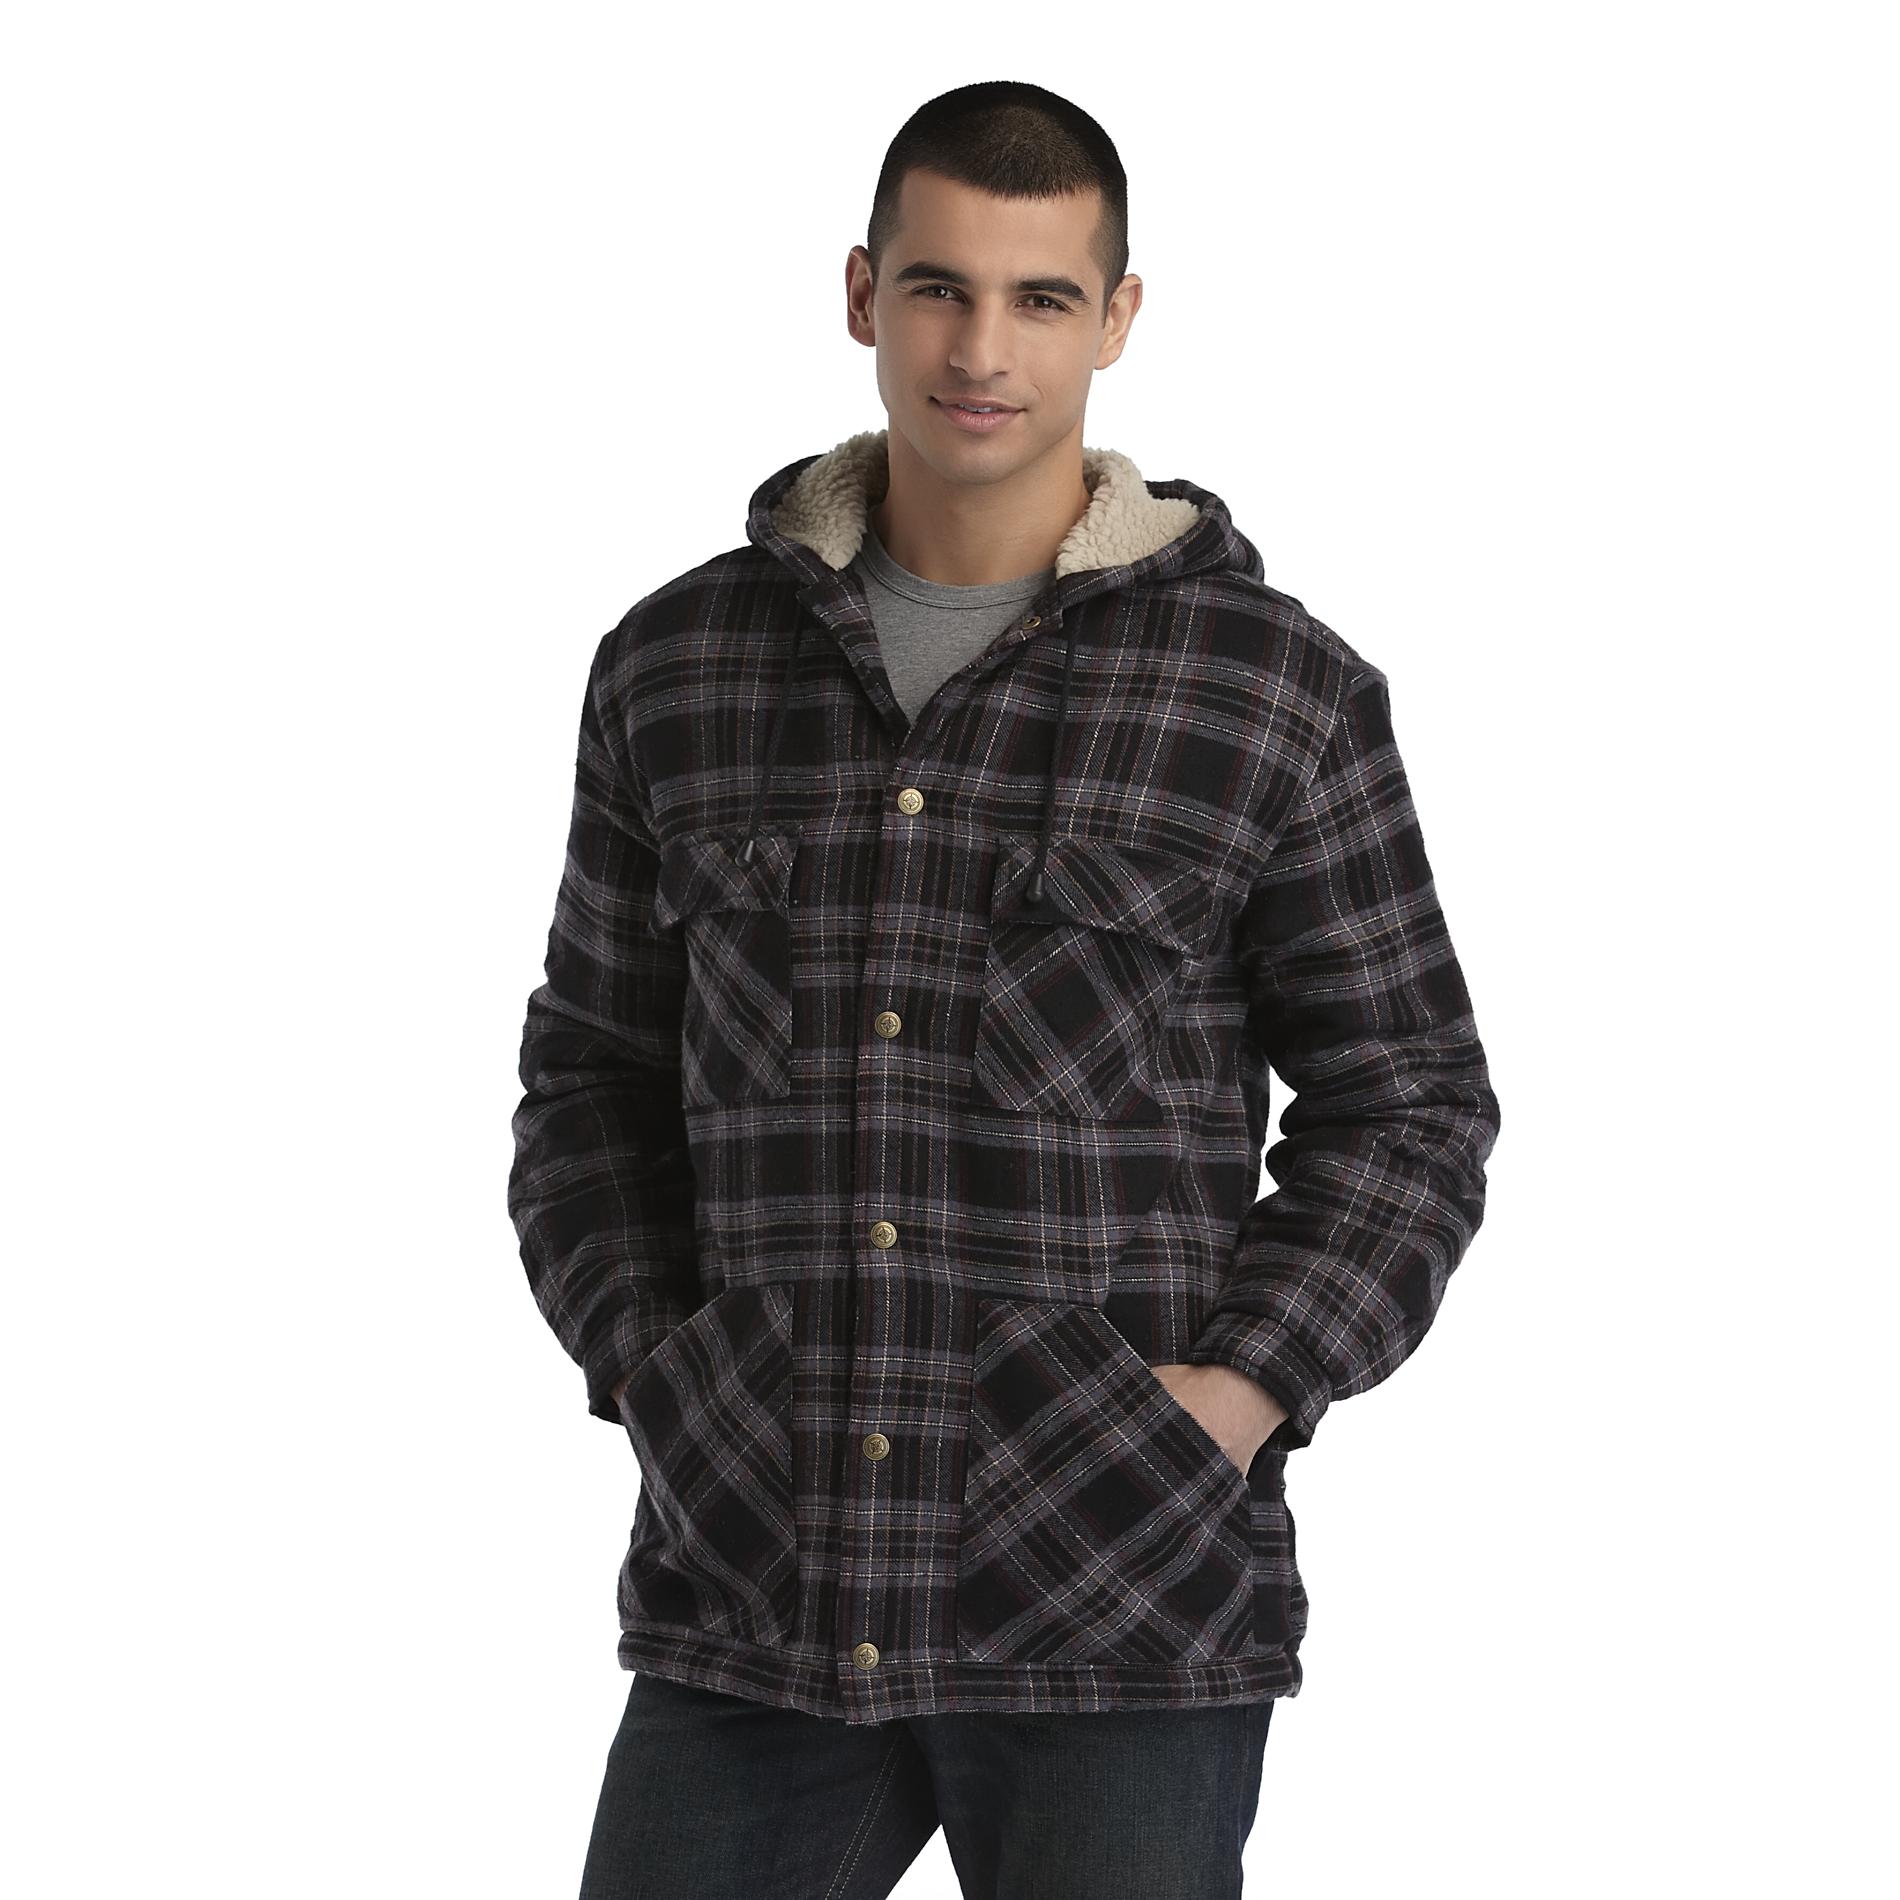 Basic Editions Men's Hooded Jacket - Plaid